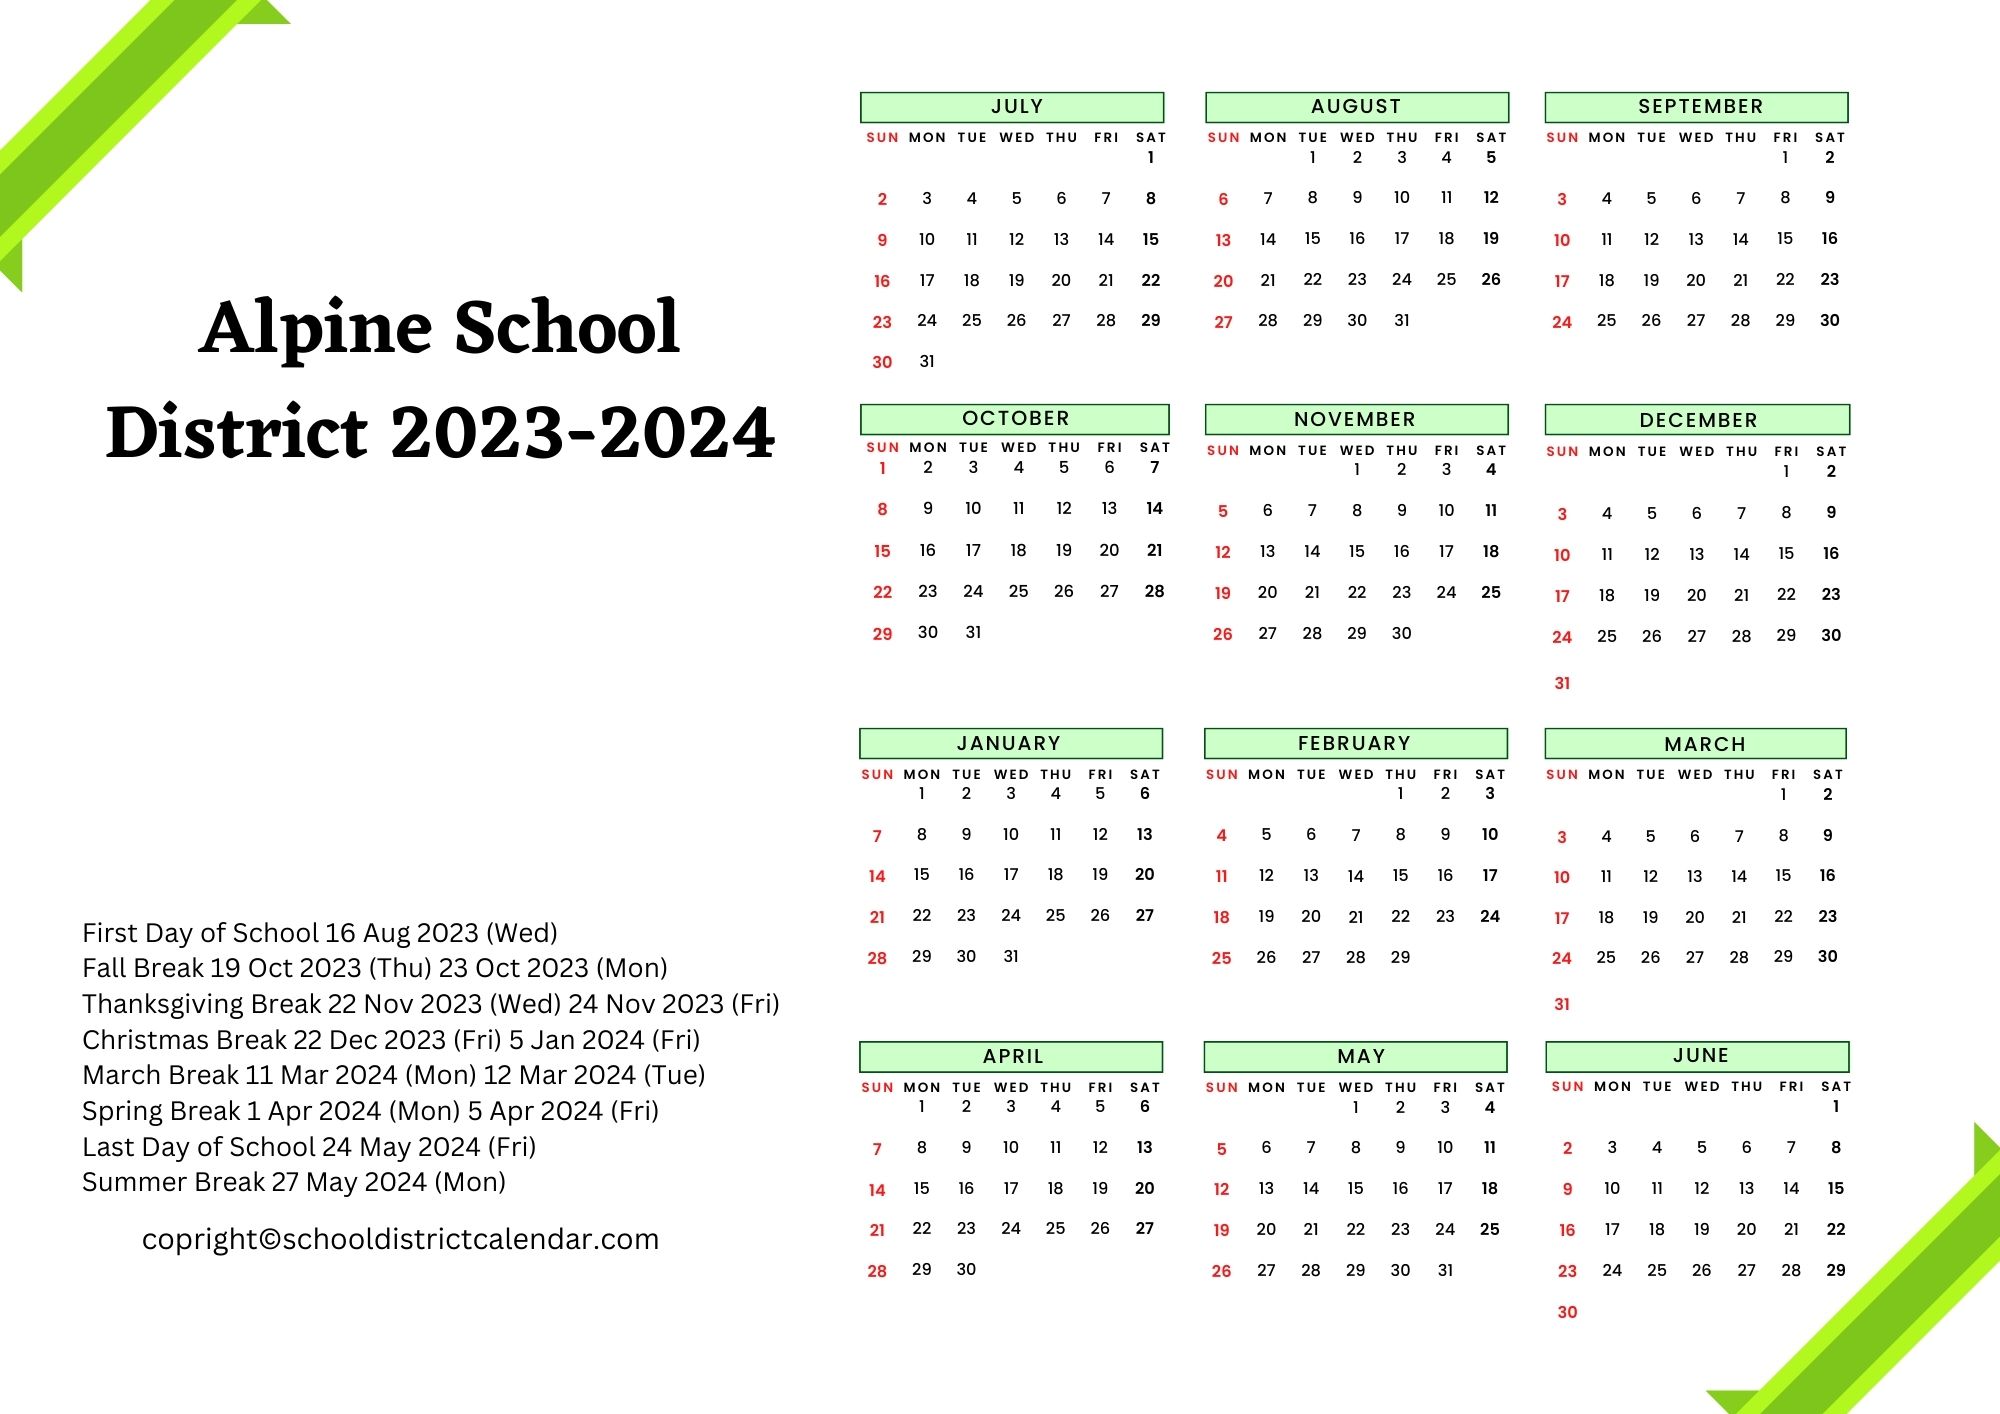 alpine-school-district-calendar-holidays-2023-2024